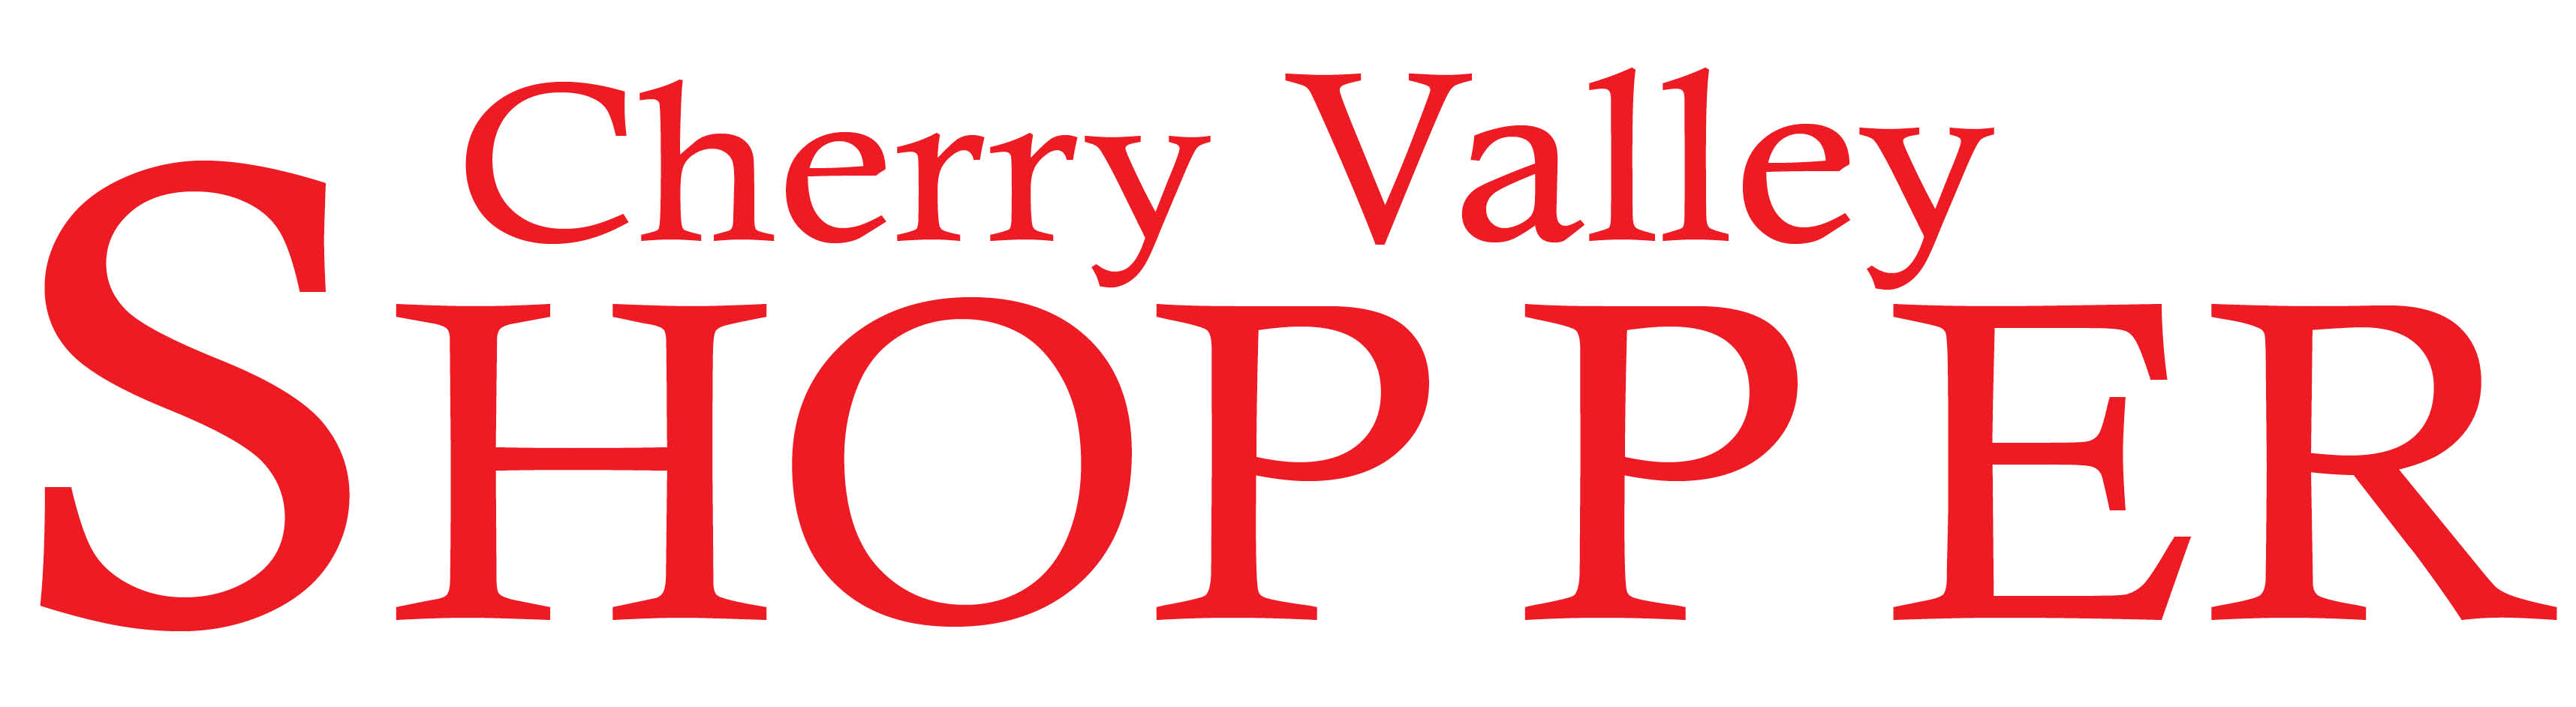 2/1/18 Cherry Valley Shopper